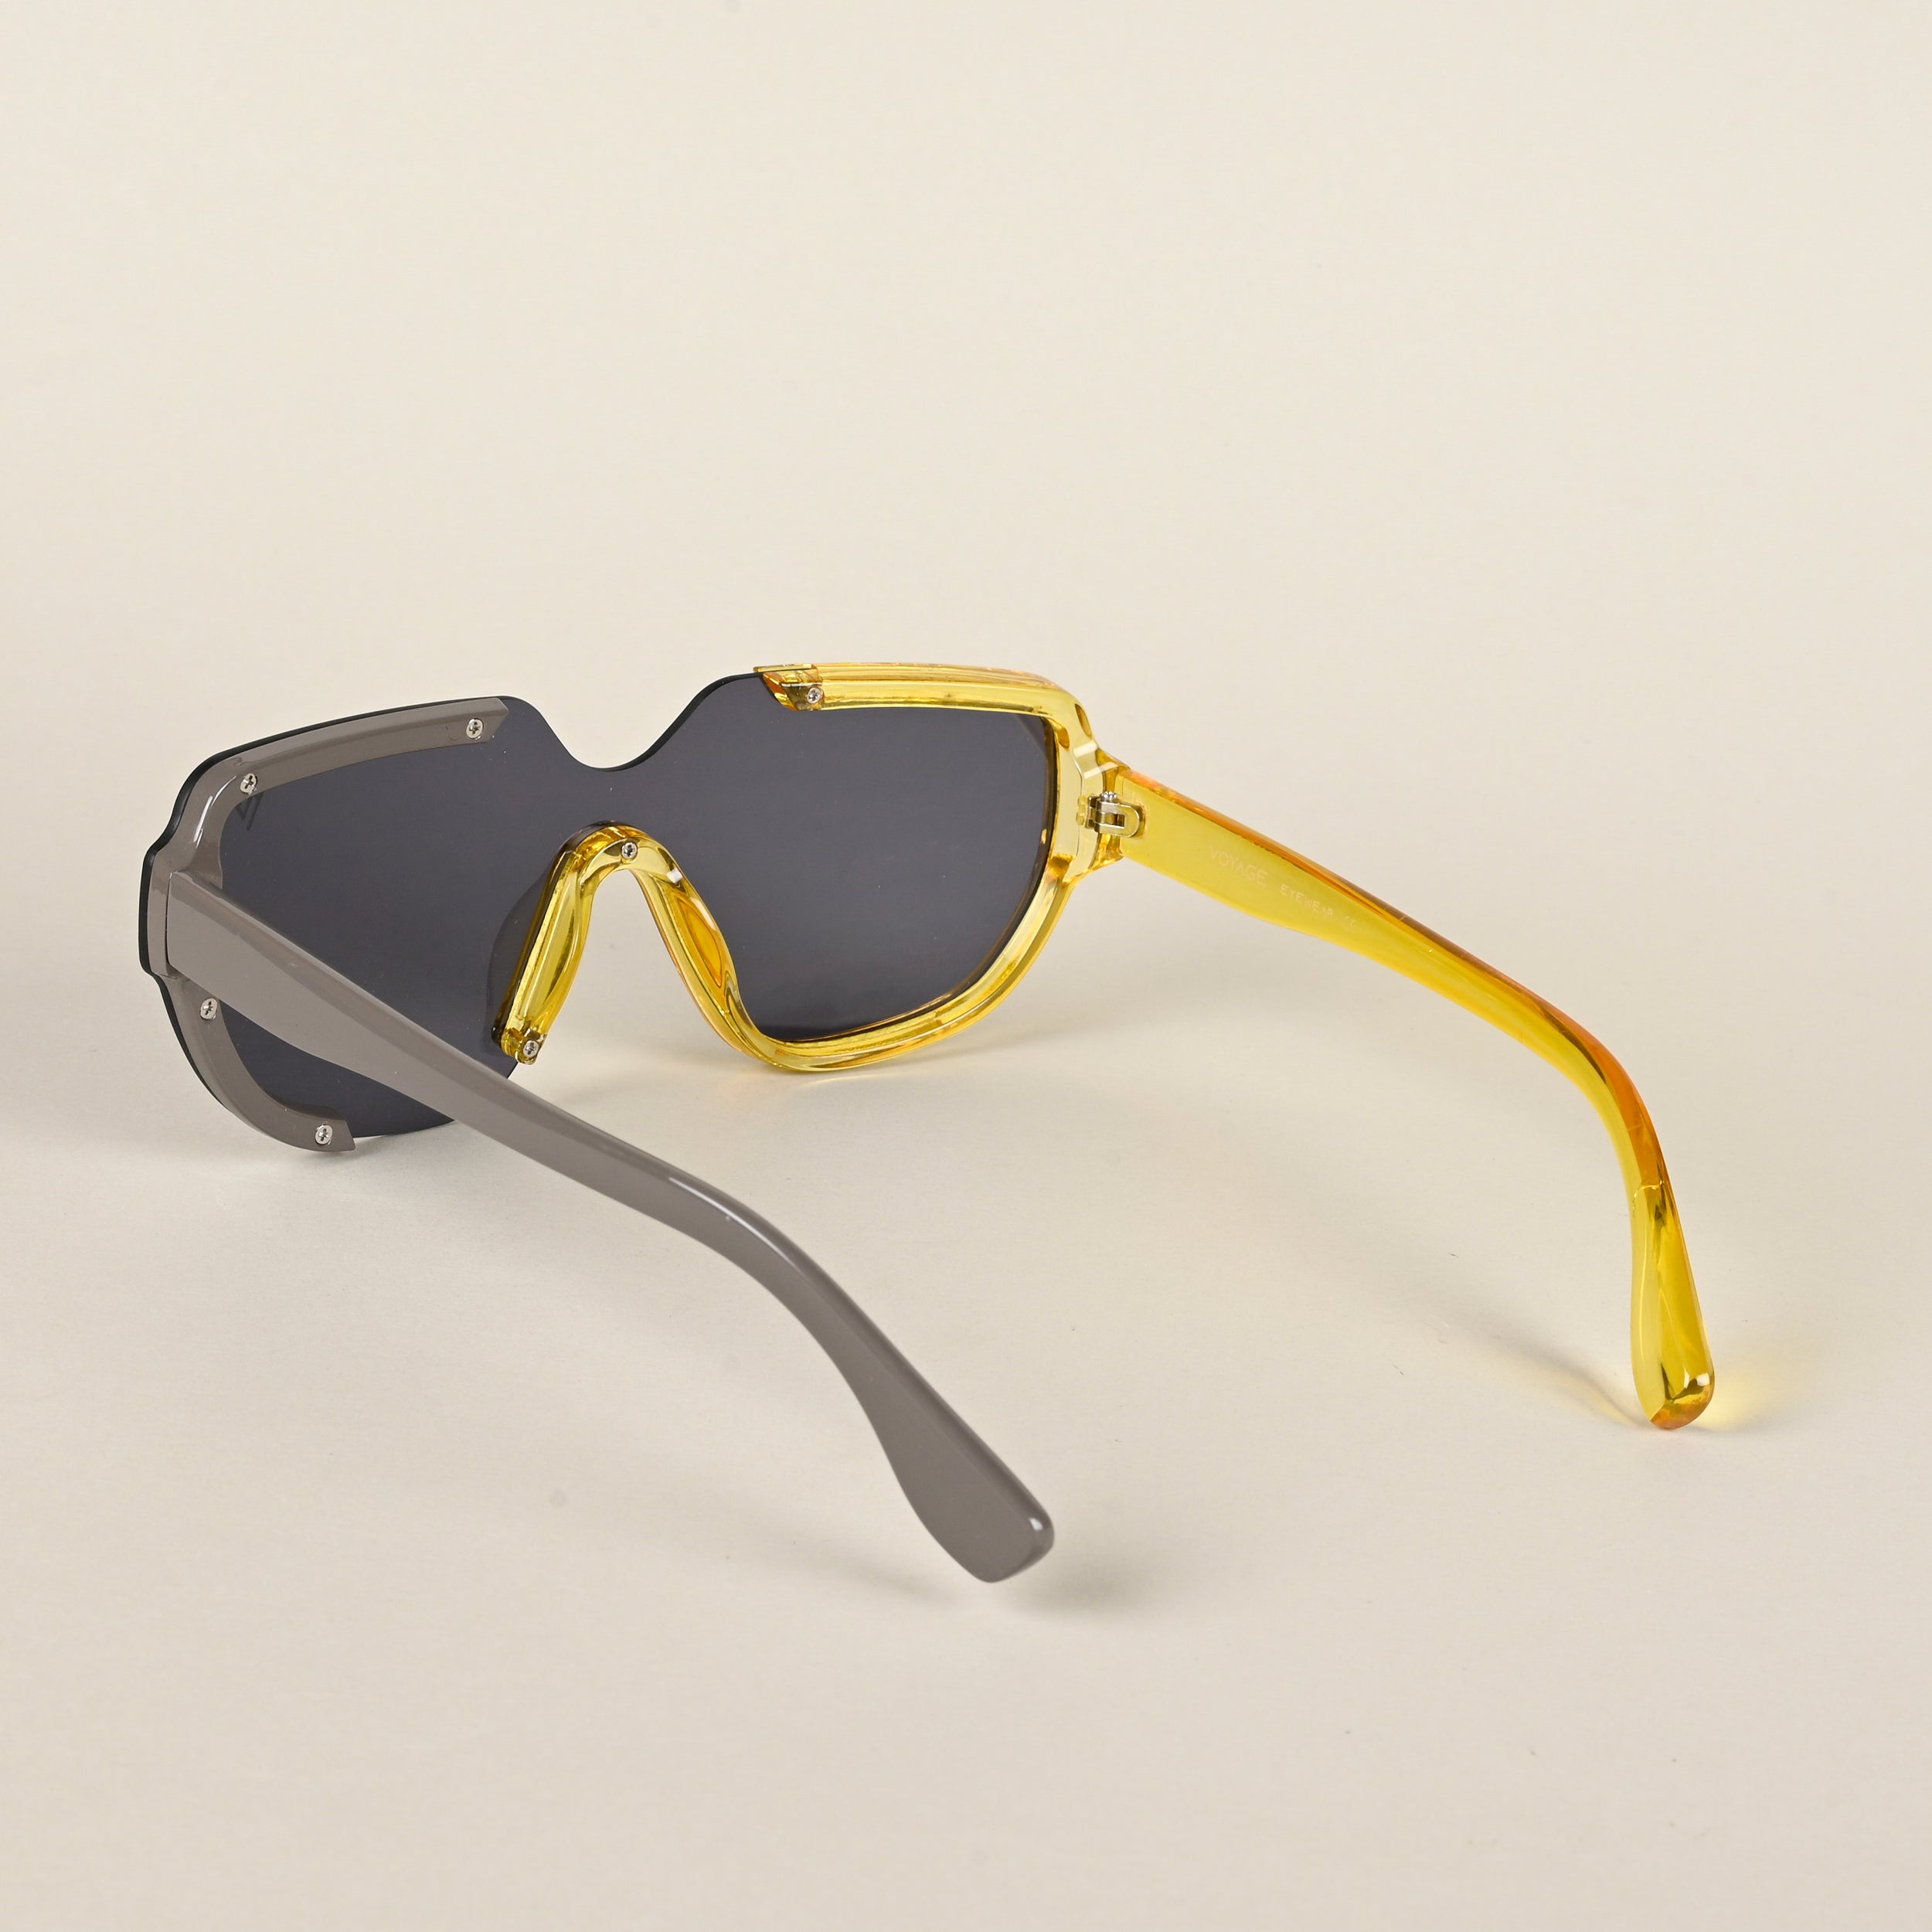 Voyage Black Wayfarer Sunglasses for Men & Women - MG4184